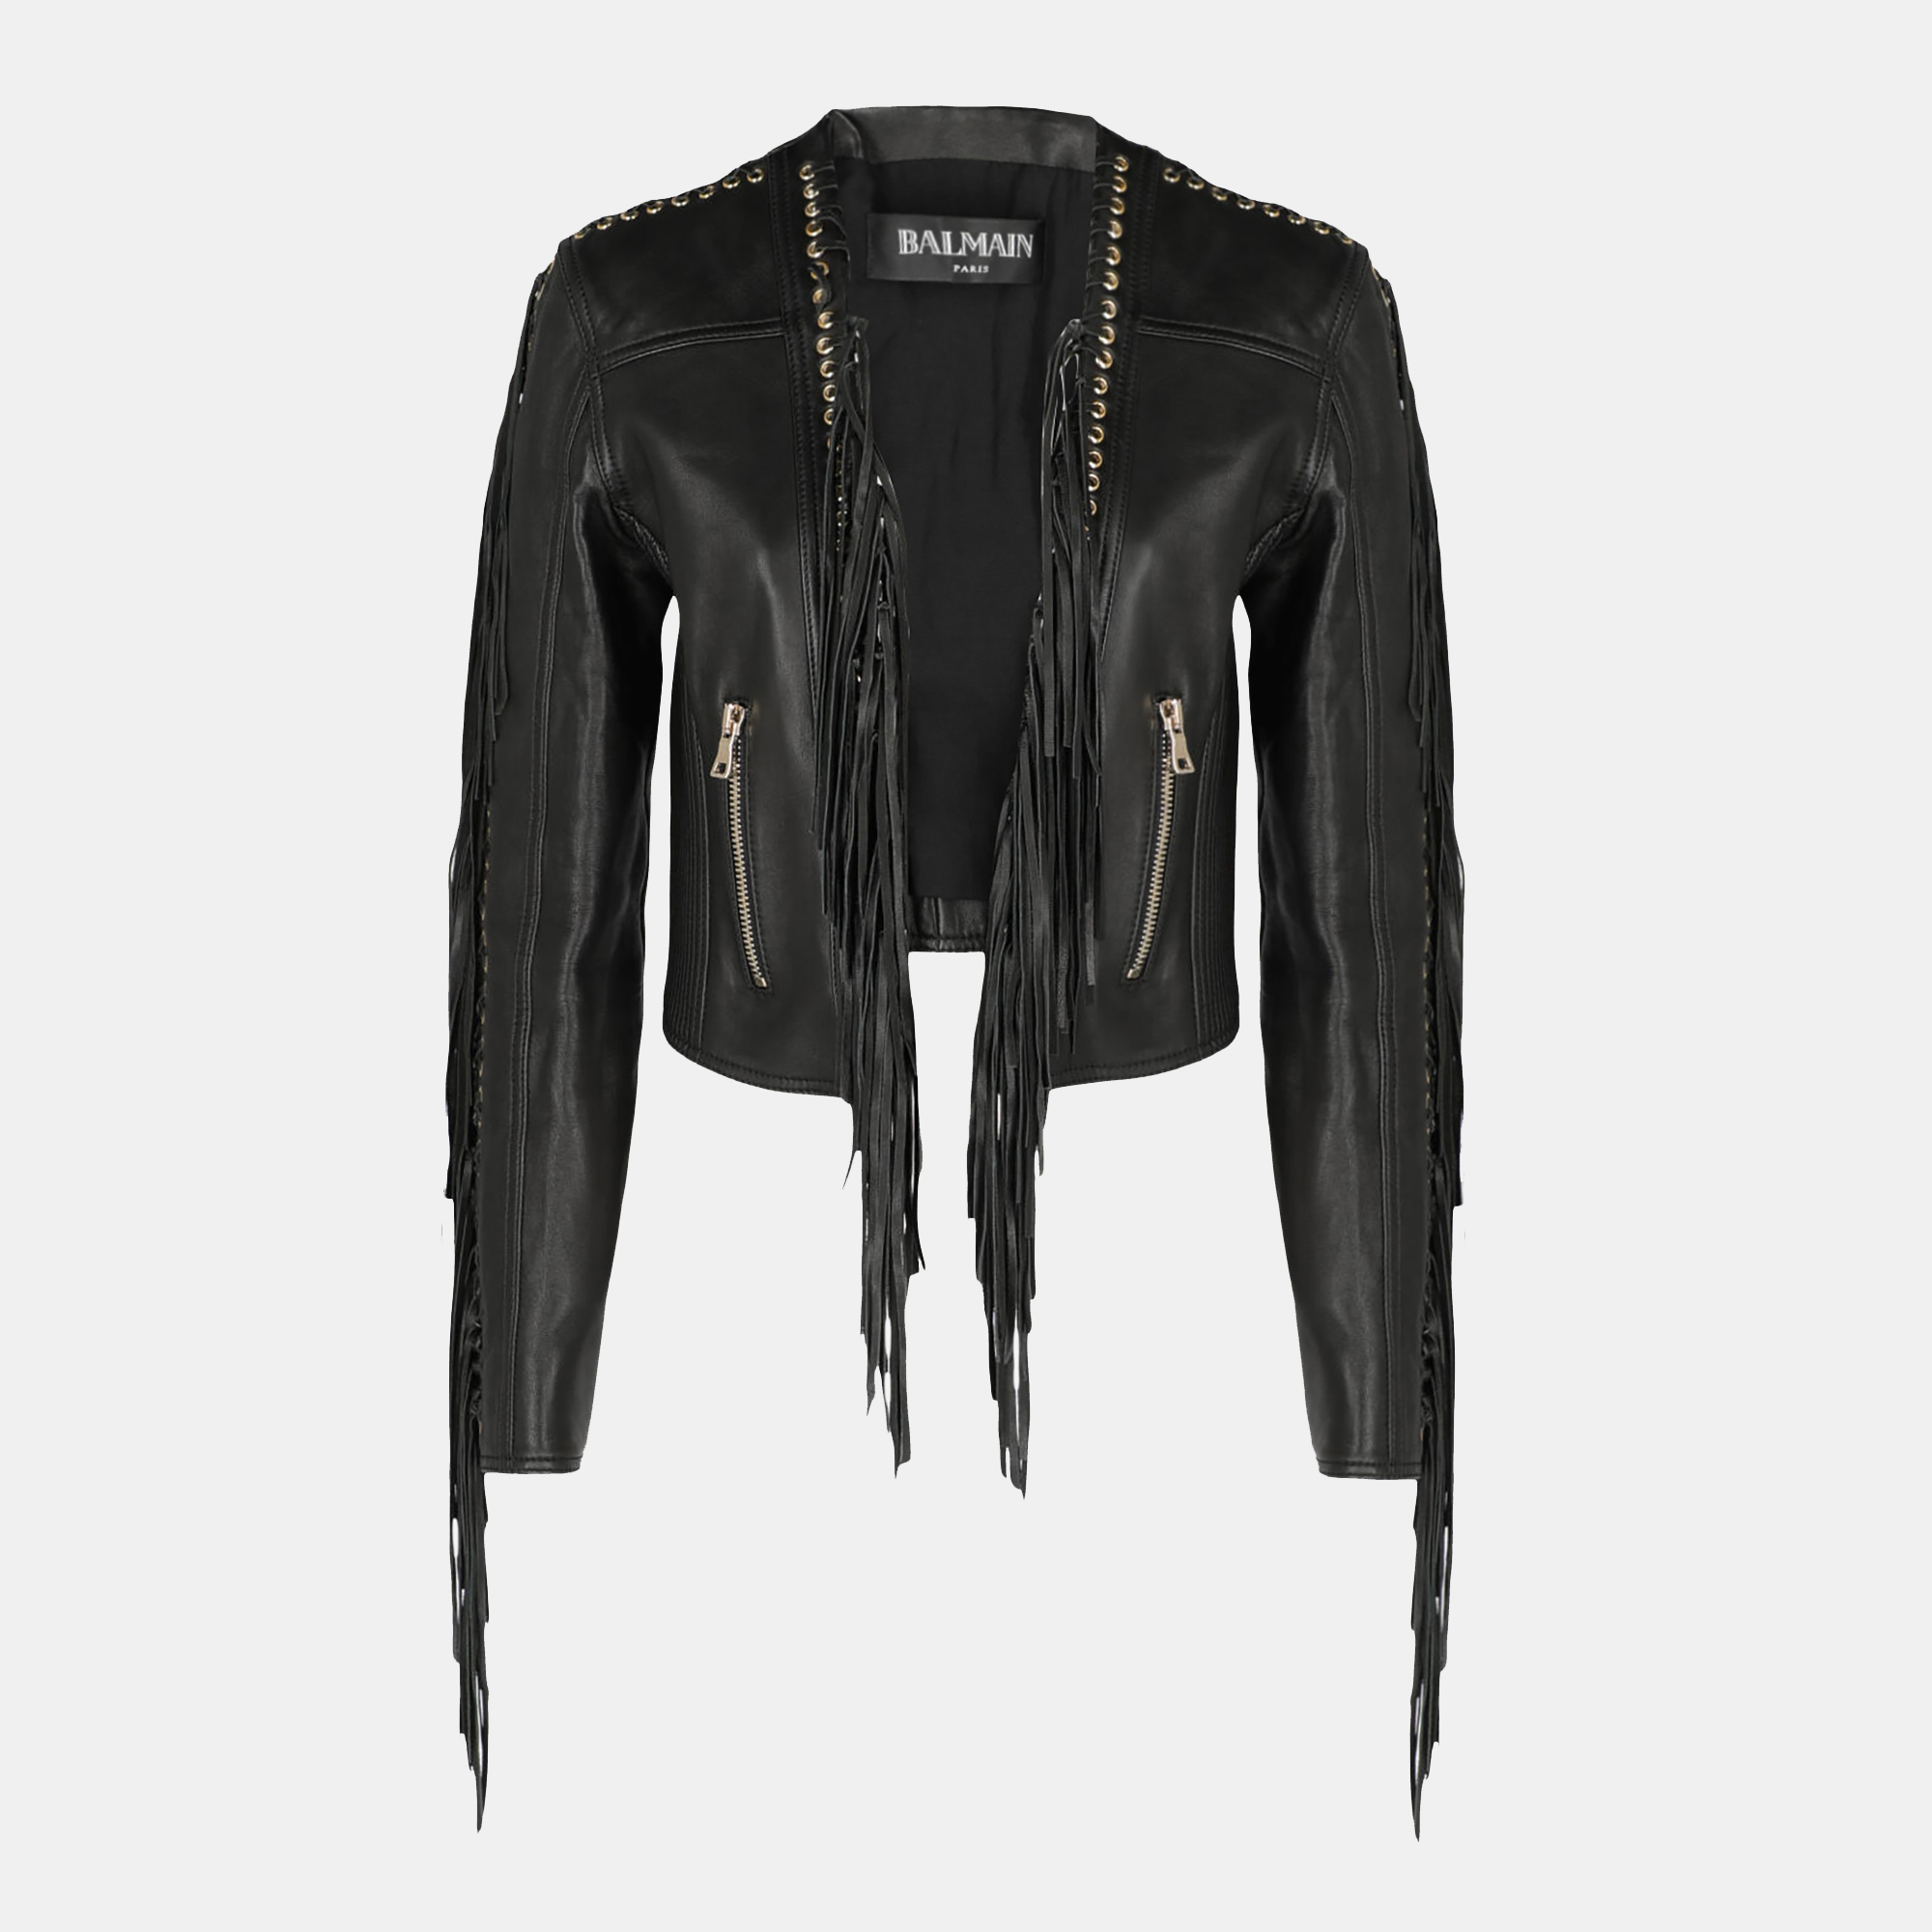 Balmain  Women's Leather Biker Jacket - Black - M